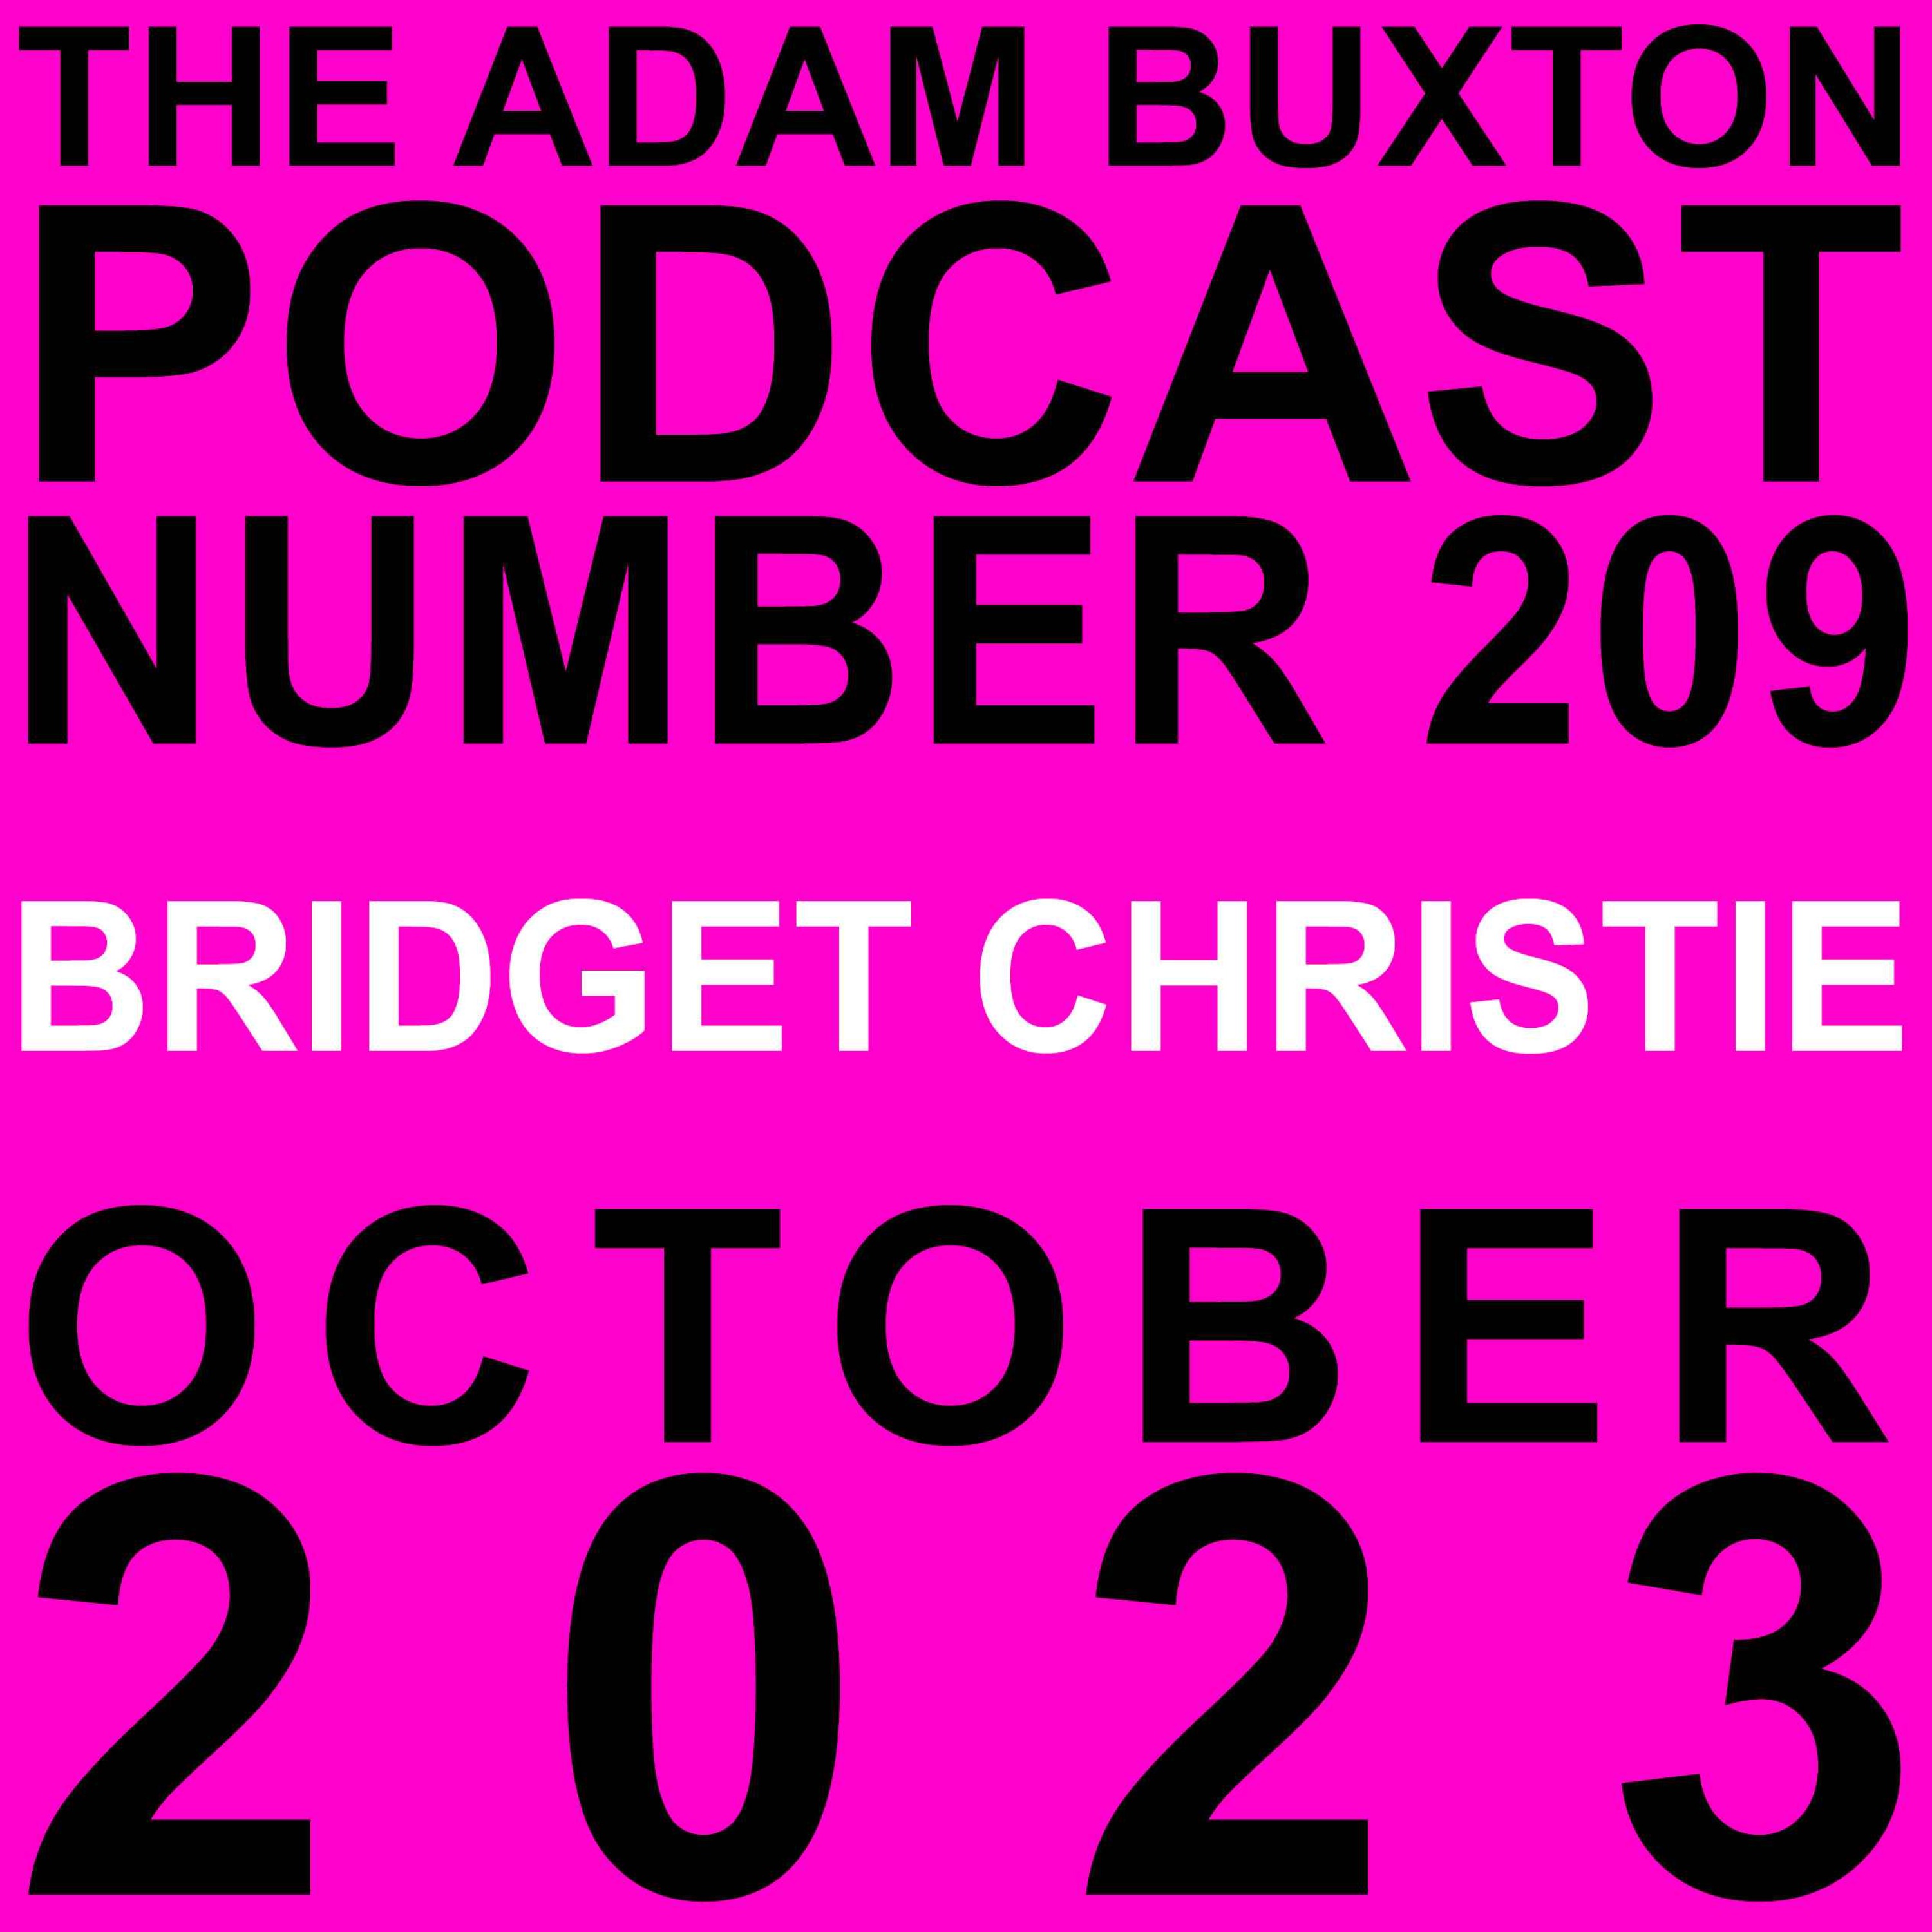 EP.209 - BRIDGET CHRISTIE